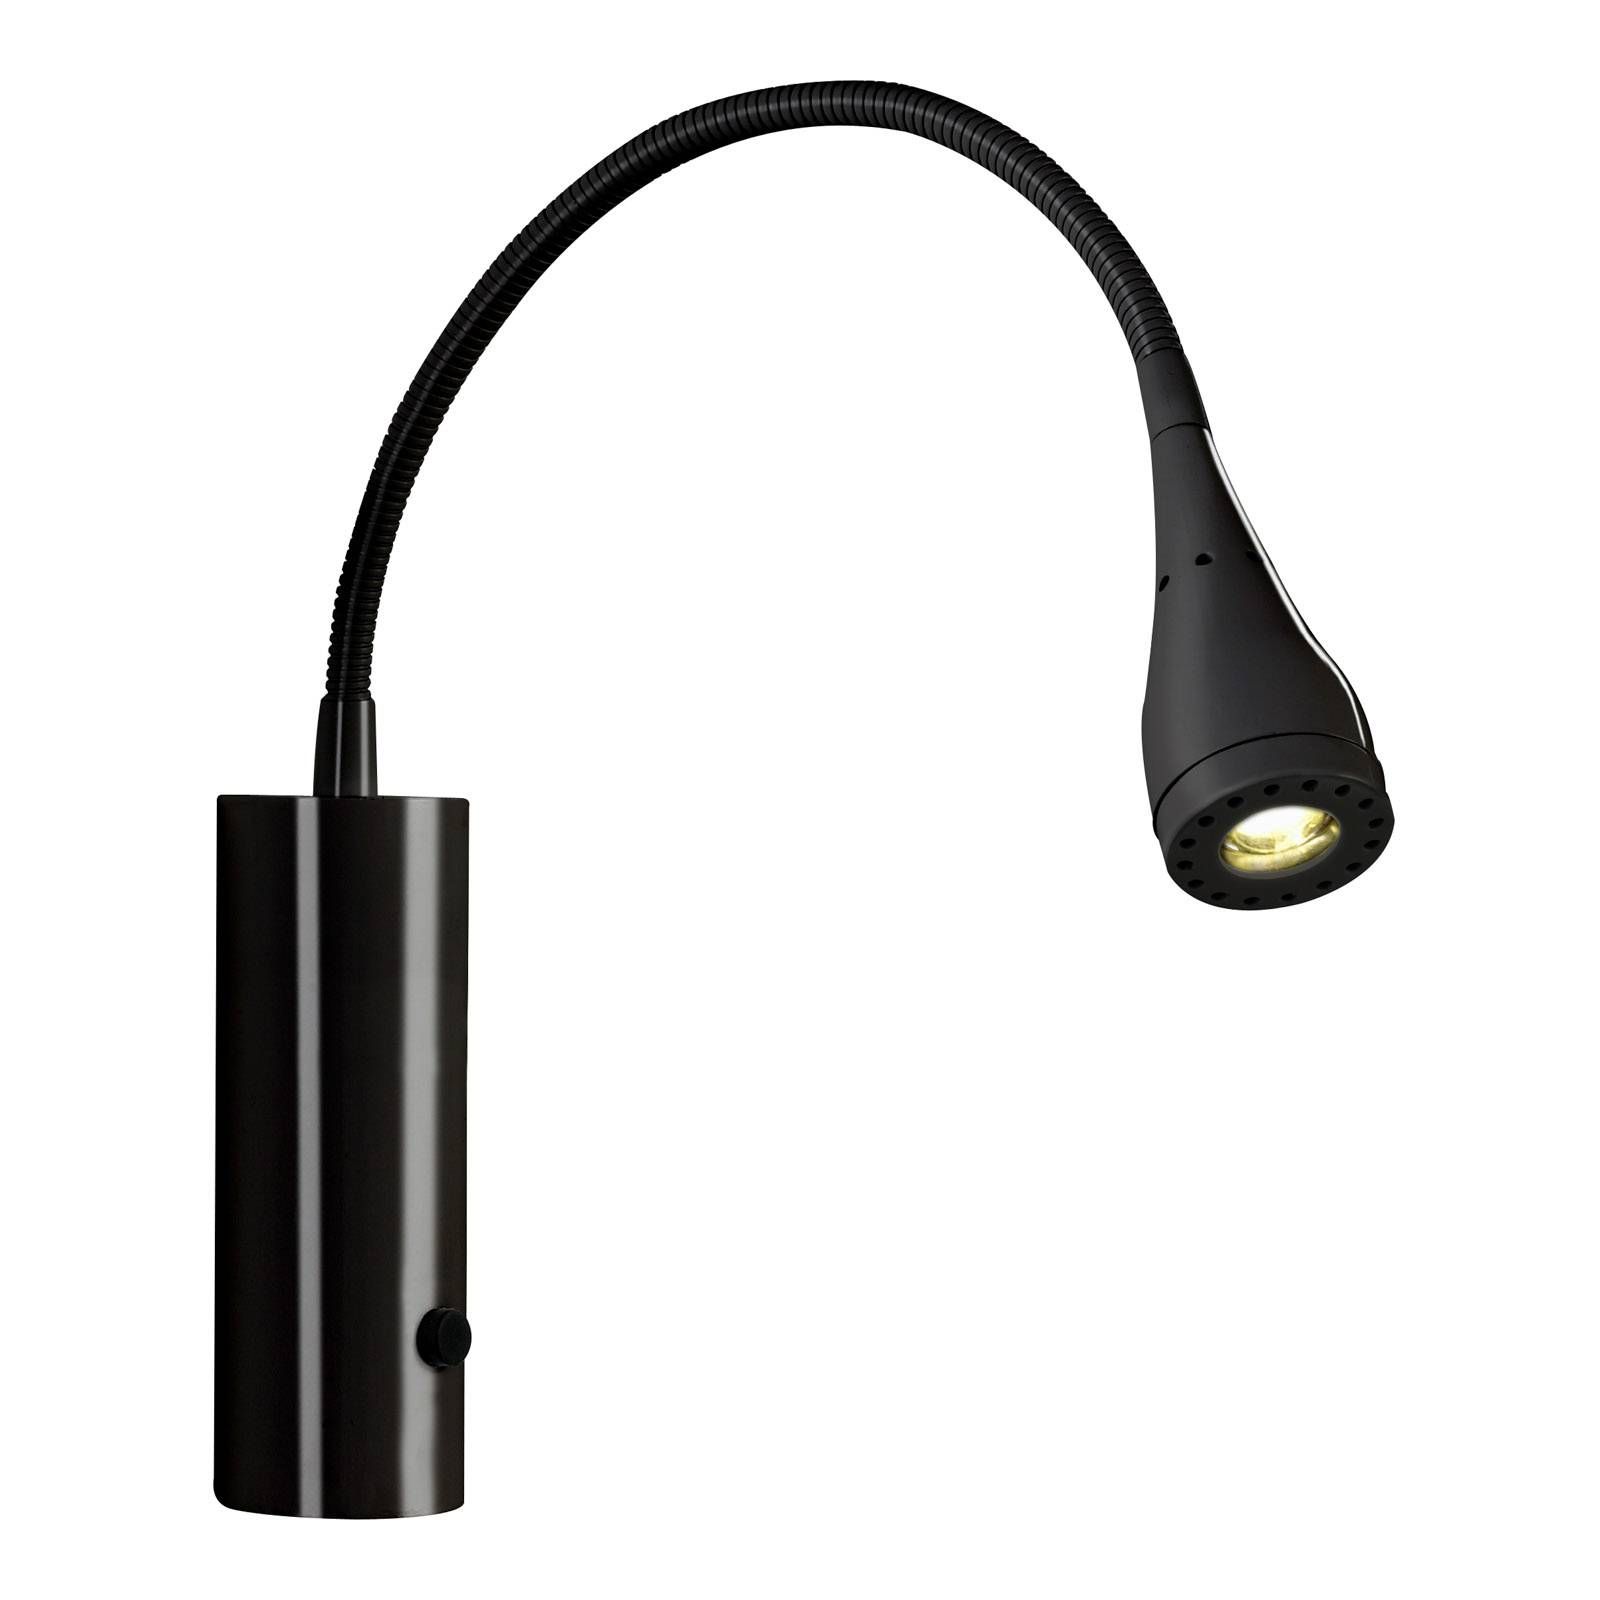 Nordlux LED svietidlo Mento s flexibilným ramenom, čierne, Spálňa, Kov, 3W, Energialuokka: G, P: 28 cm, L: 5 cm, K: 30cm